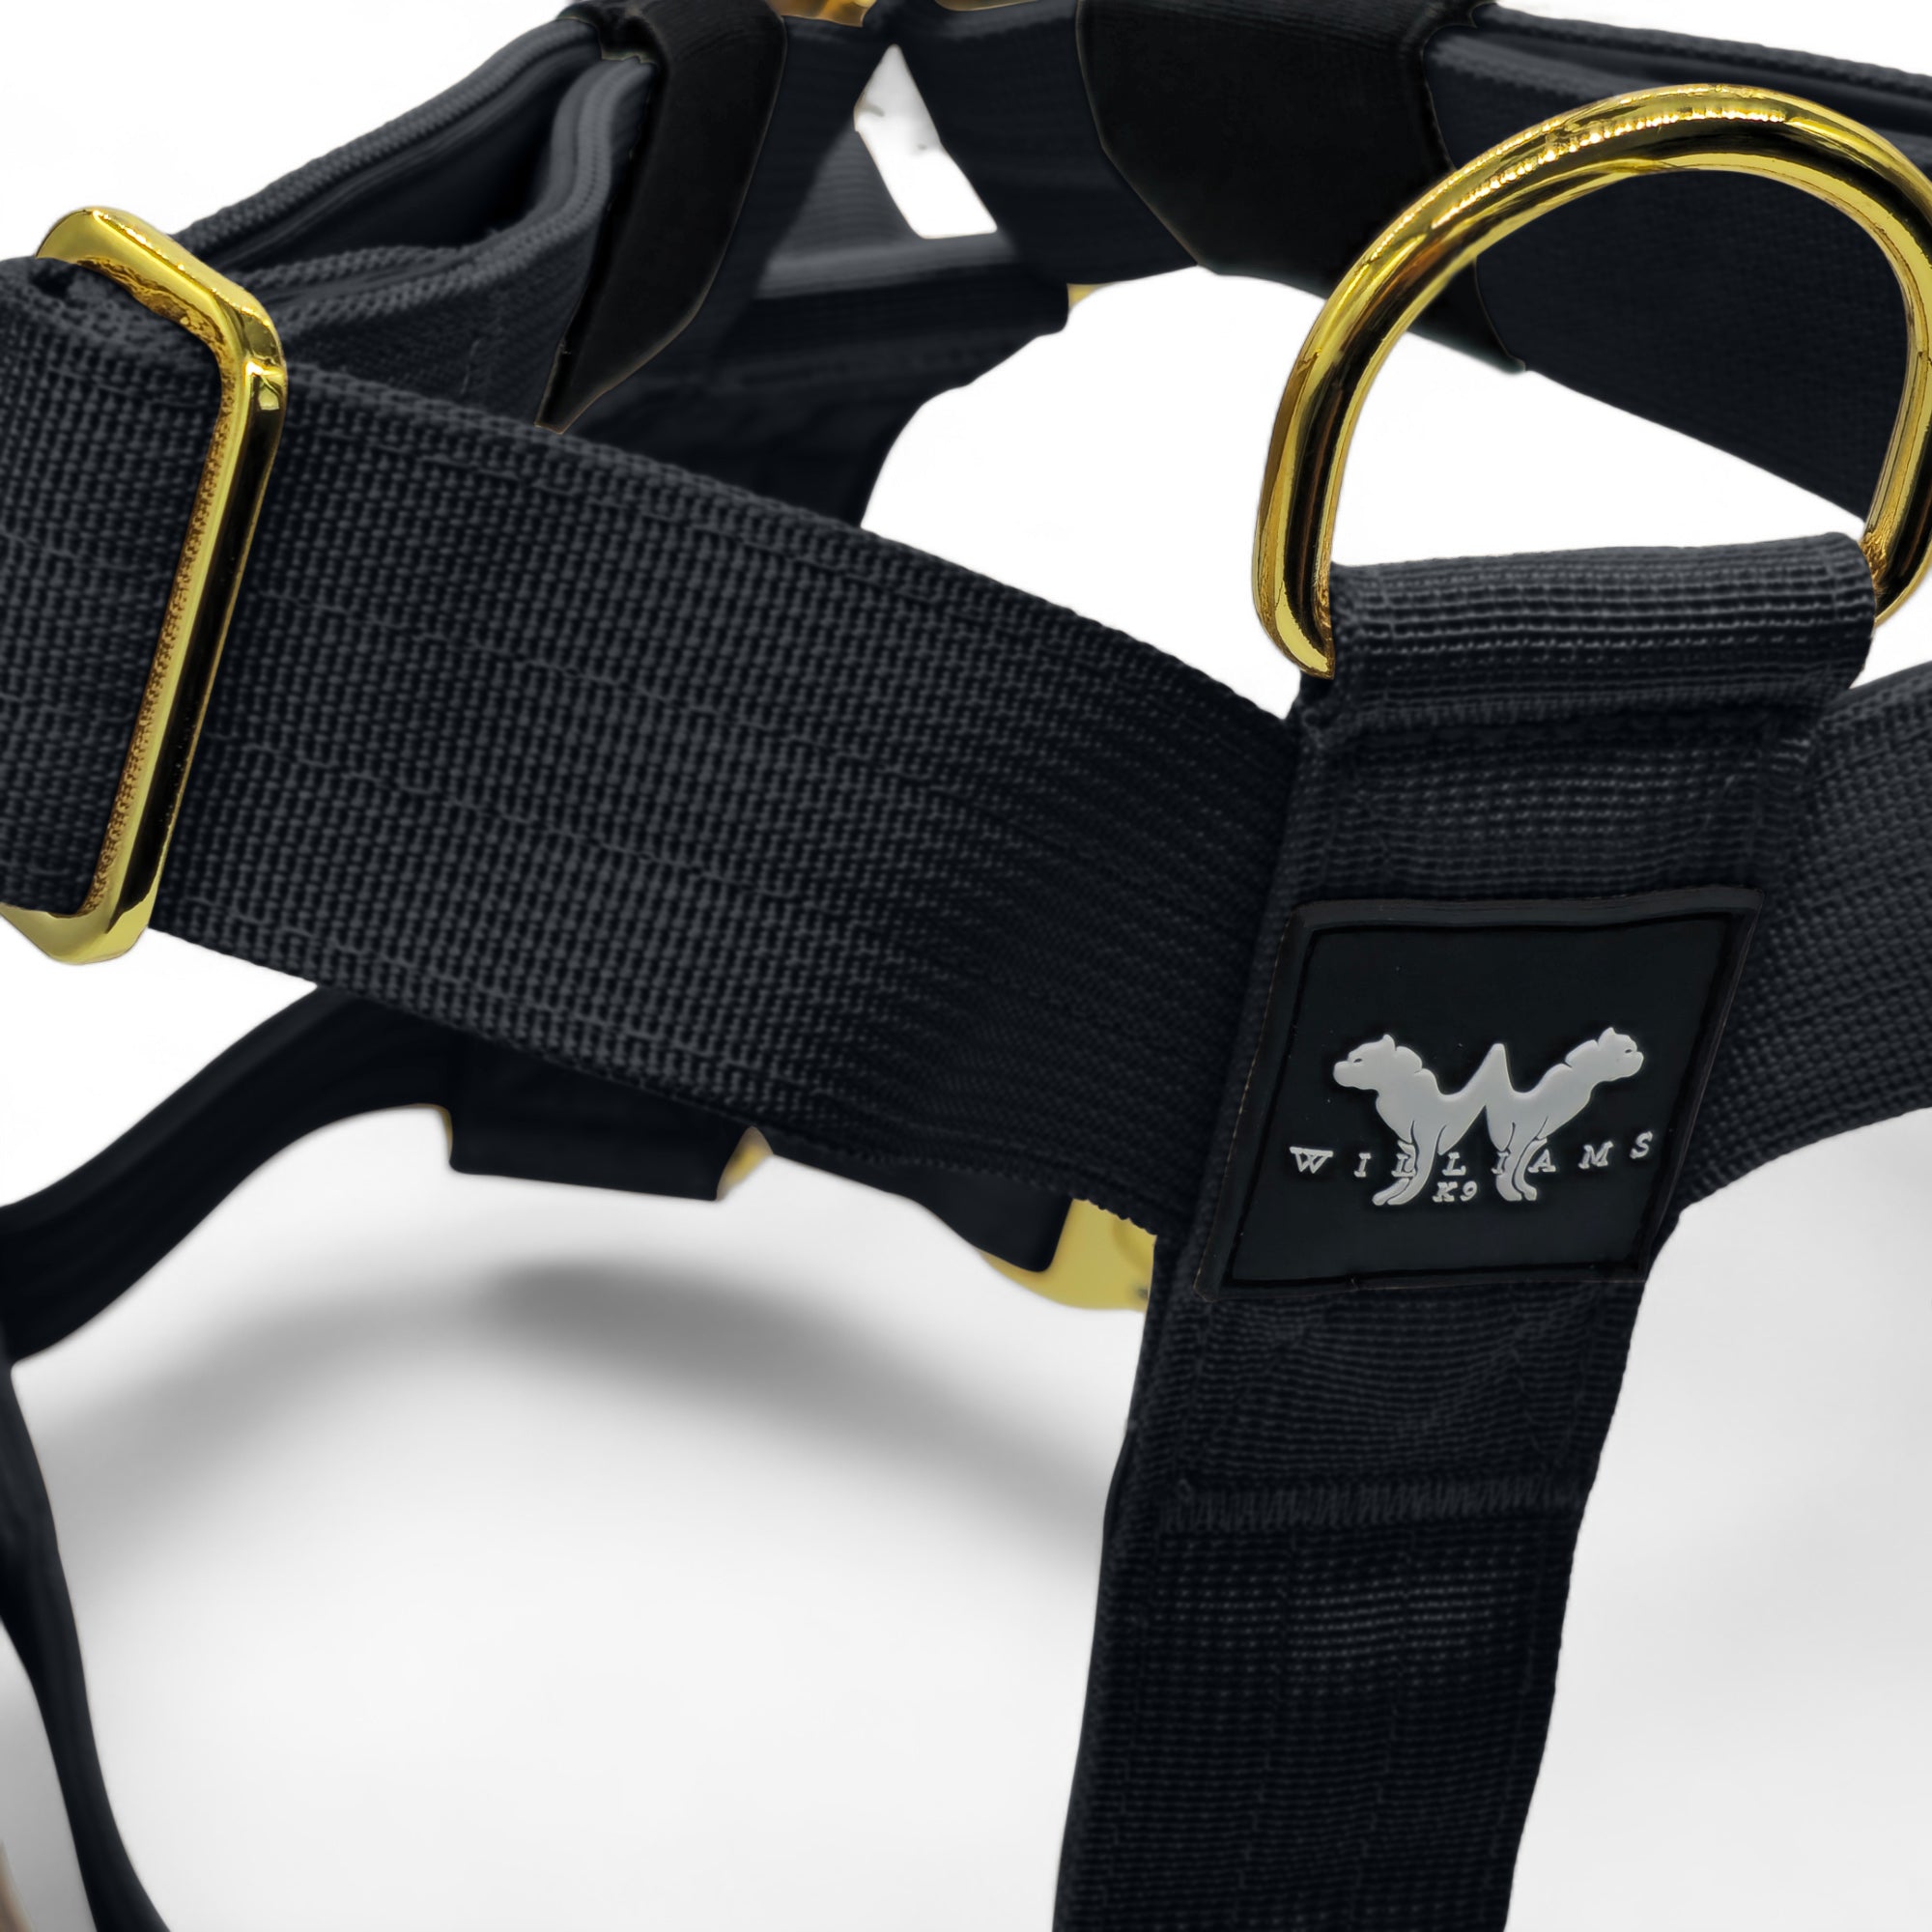 Anti-Pull Harness Black | Quad Stitched Nylon Adjustable With Control Handle